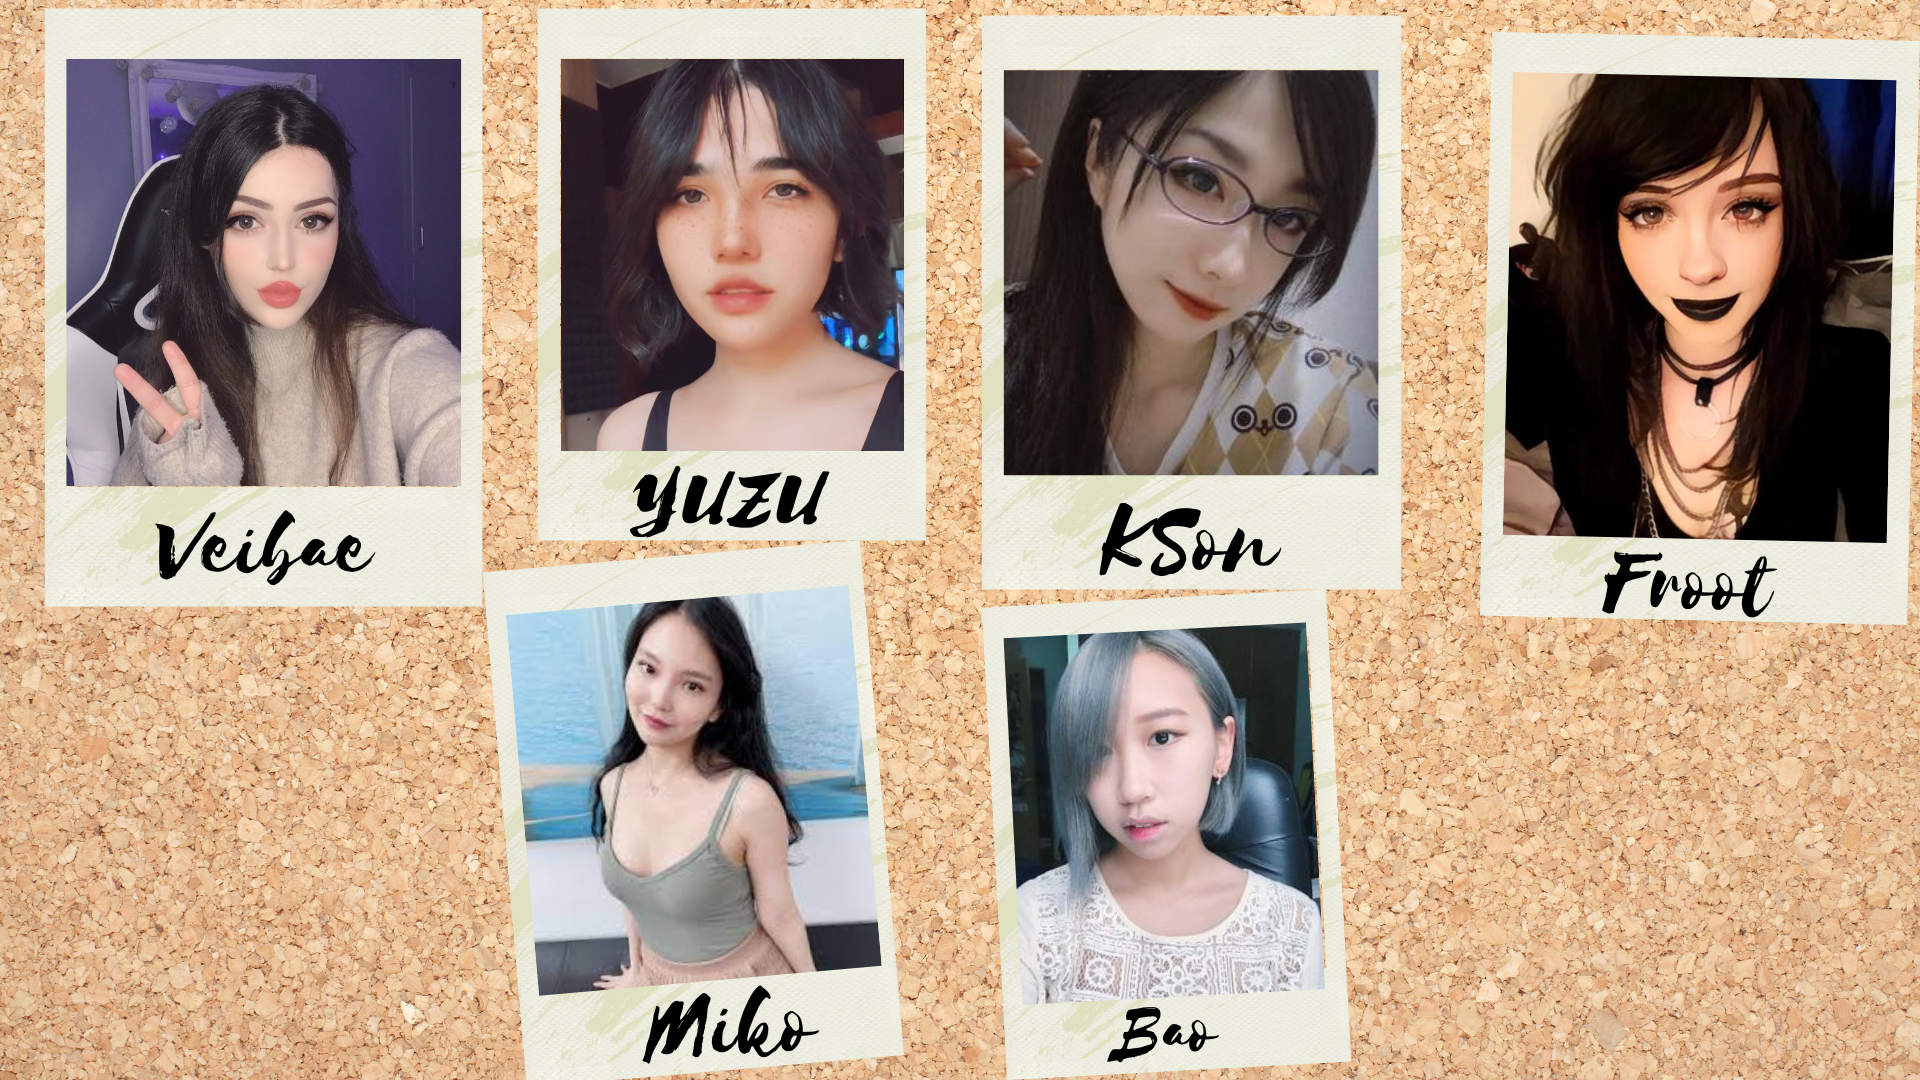 VTuber Face Reveal  13 Famous VTubers' Faces Revealed - Dere☆Project